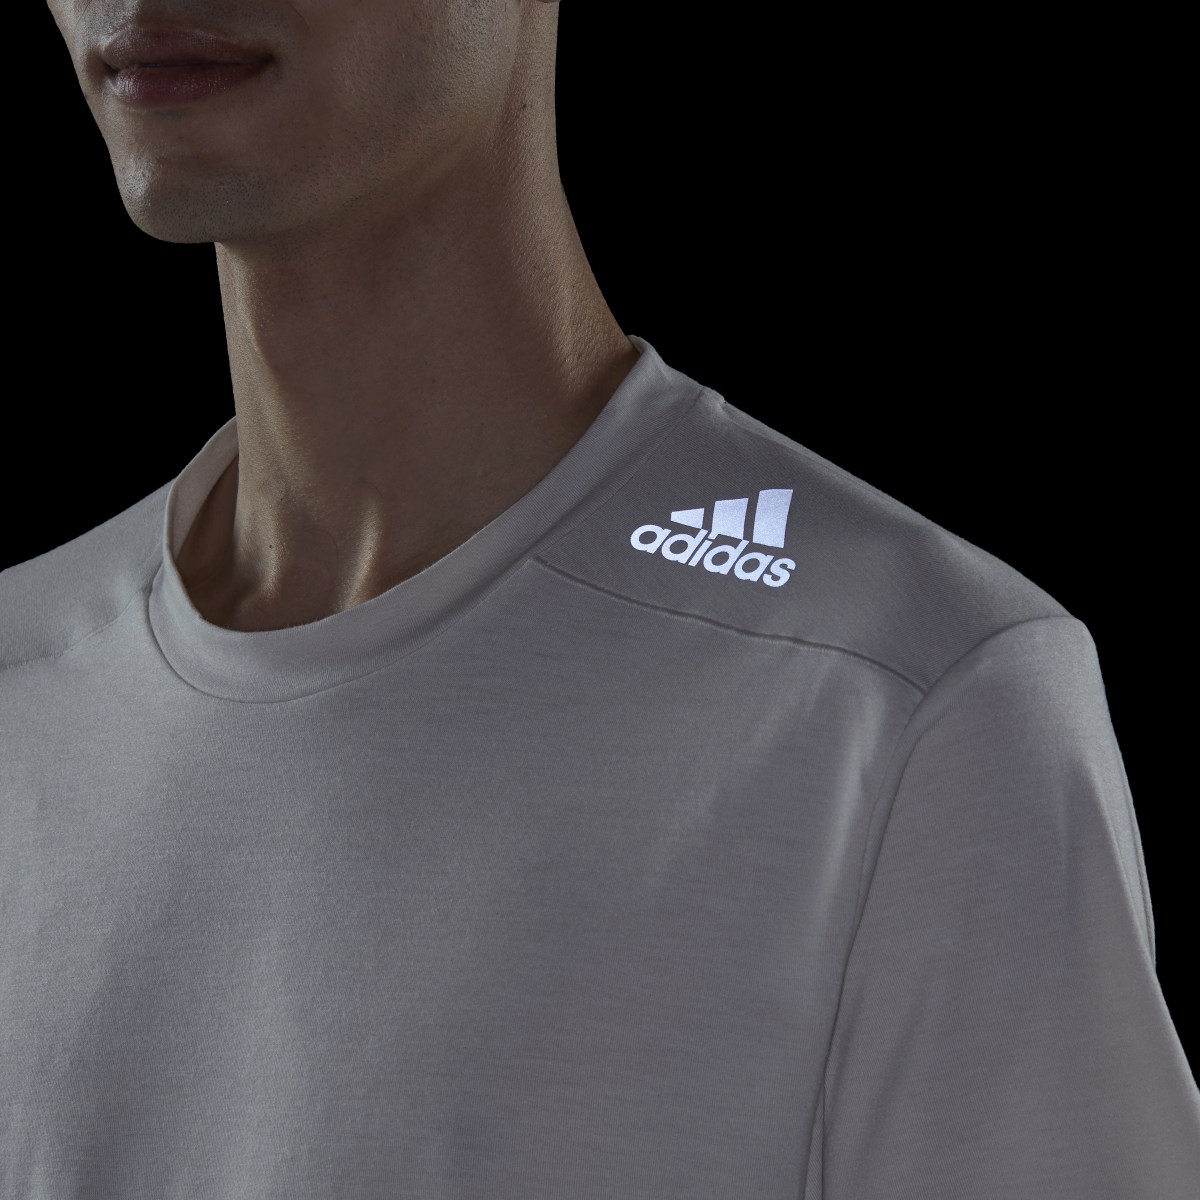 Adidas T-shirt Designed for Training. 8